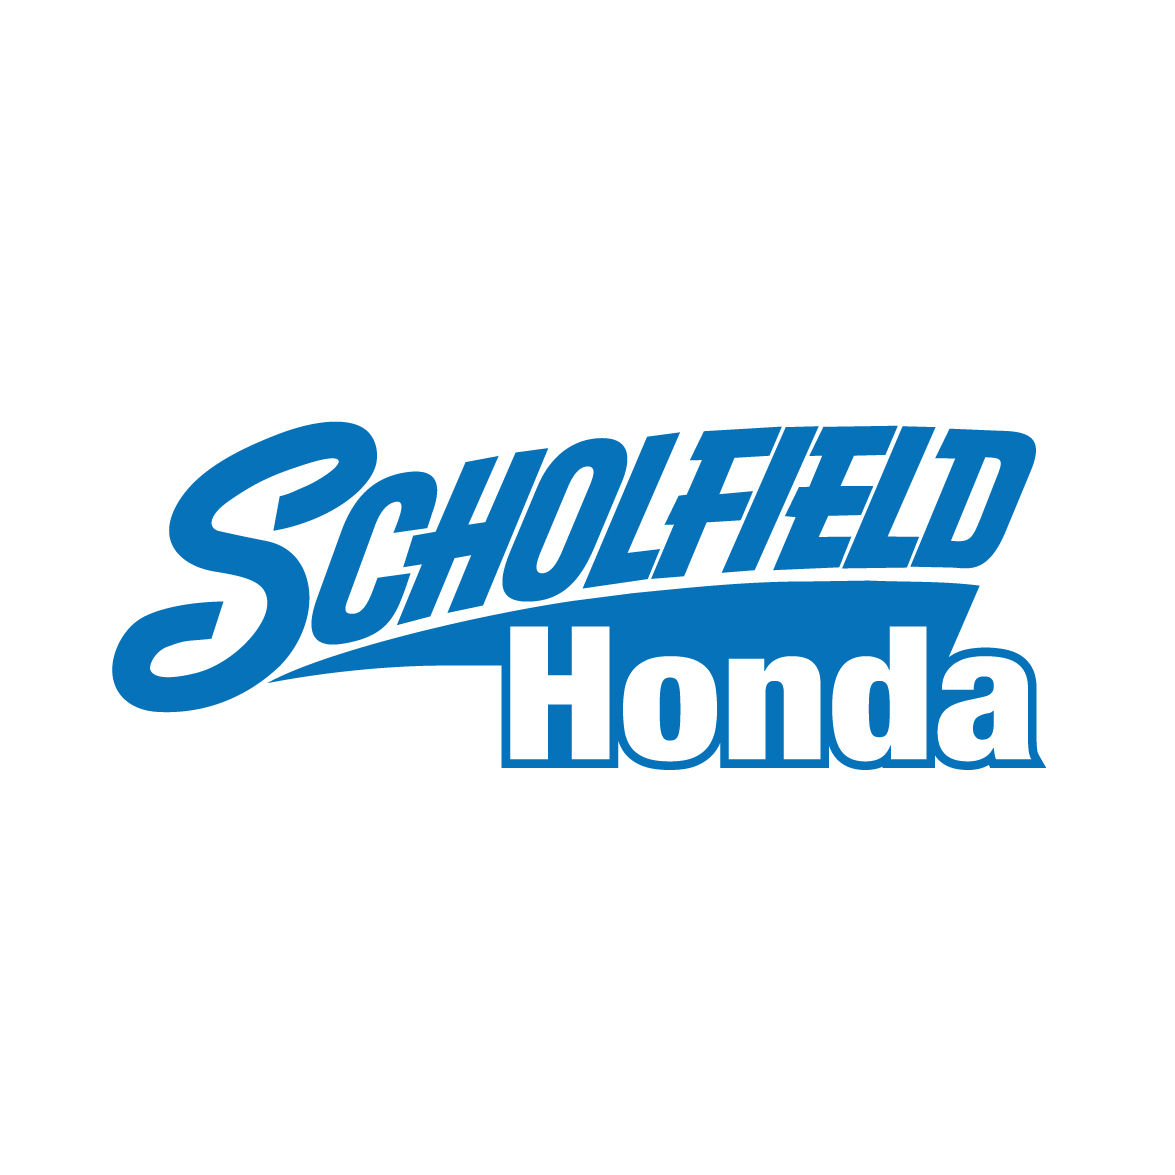 ScholfieldHonda-01